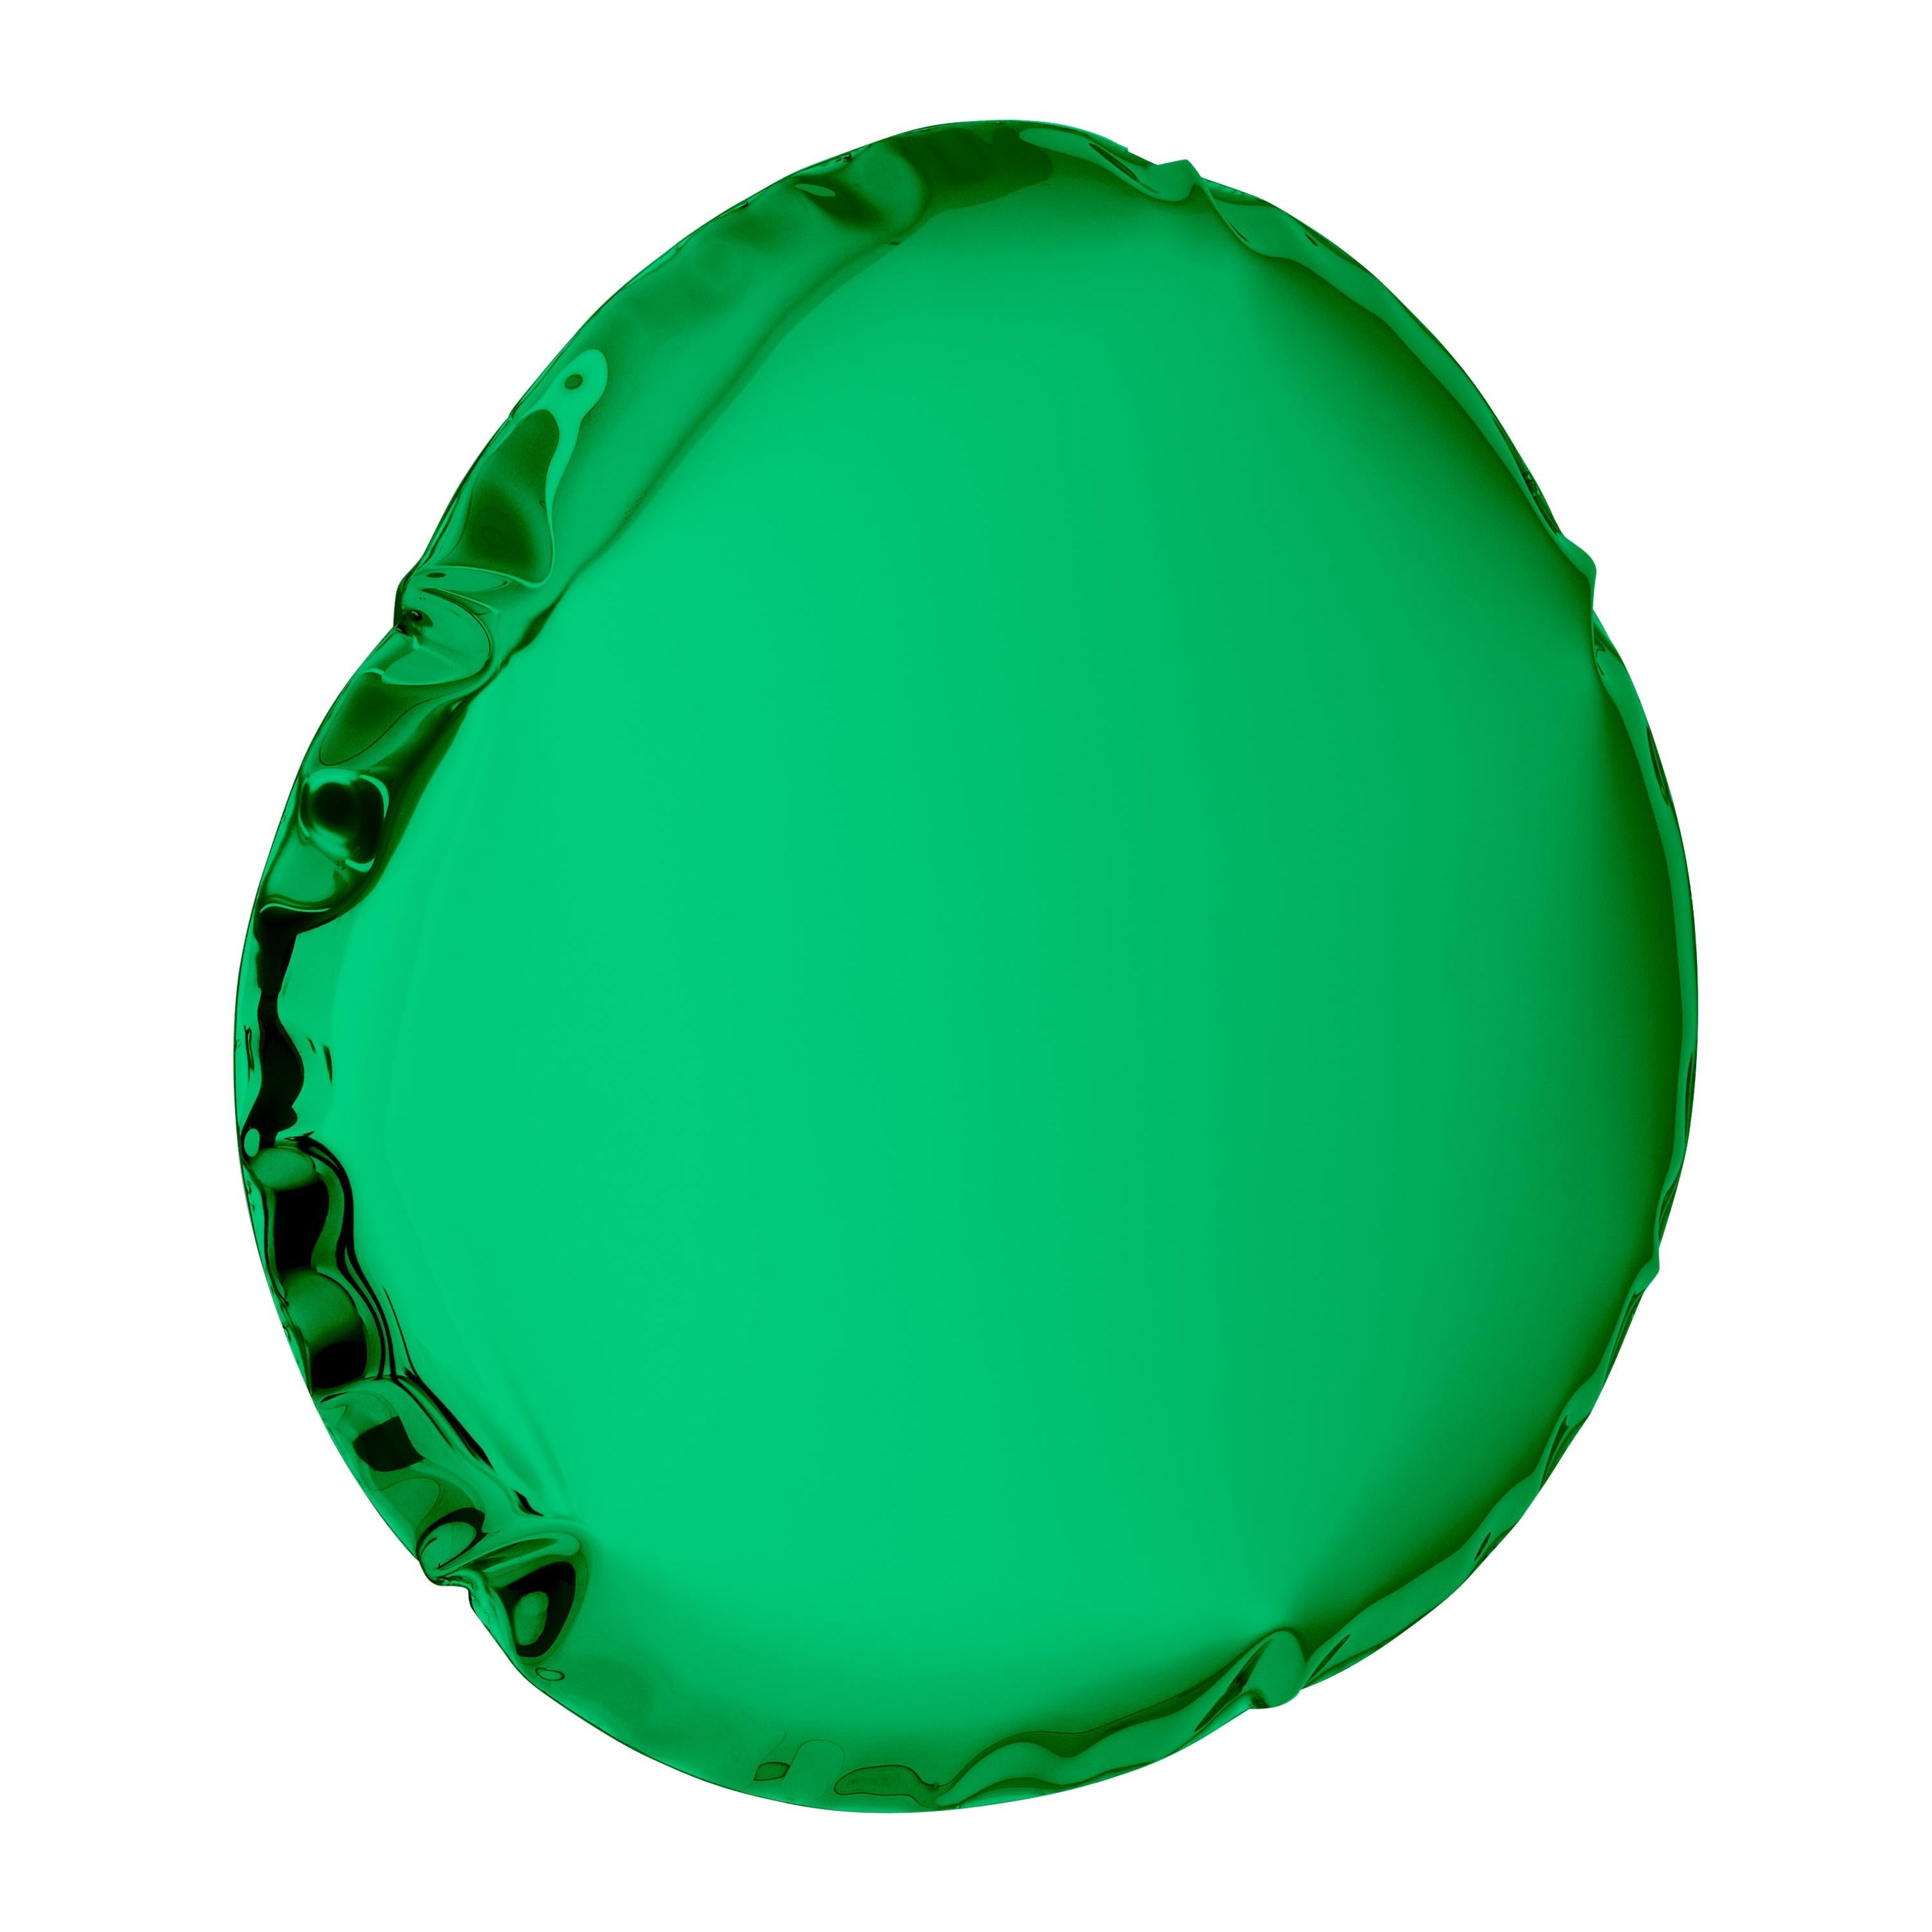 Tafla O6 Smaragd, Spiegel, polierter Edelstahl von Zieta